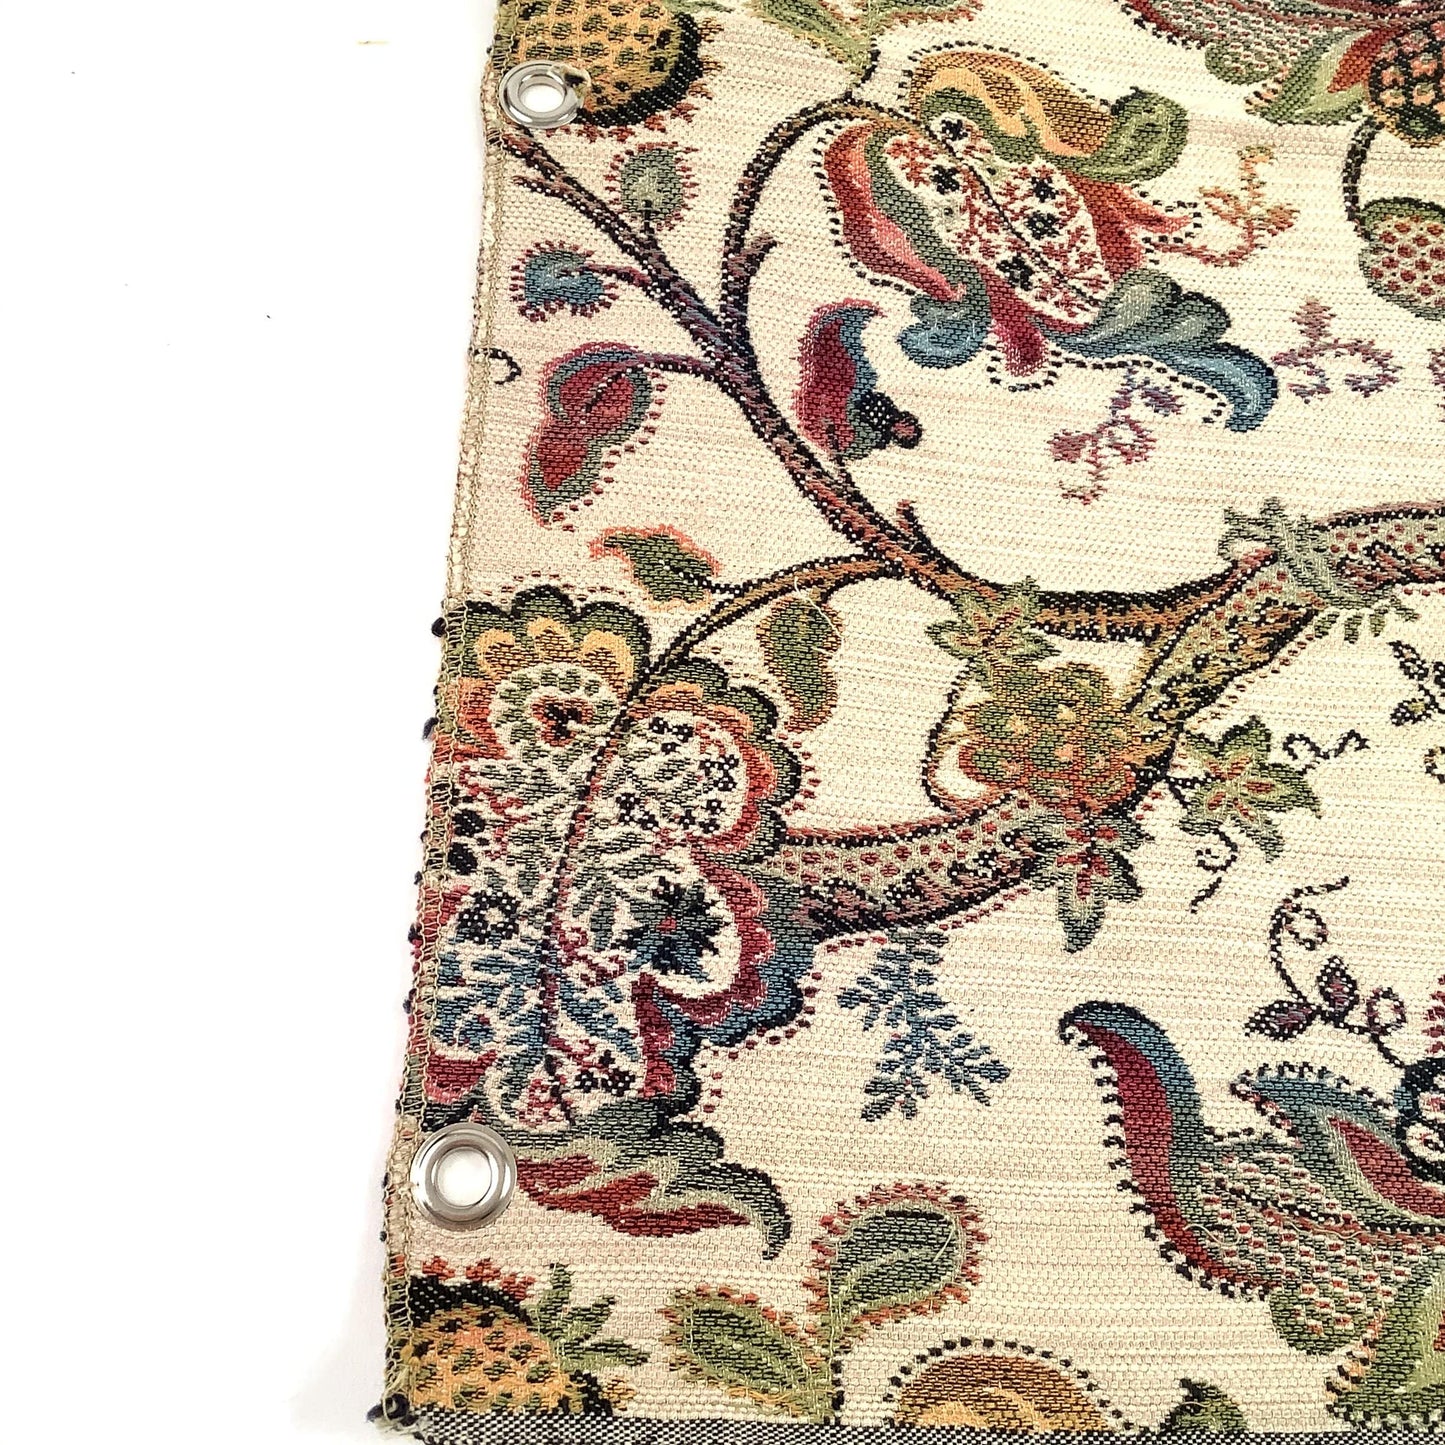 Vintage Botanical Fabric Sample